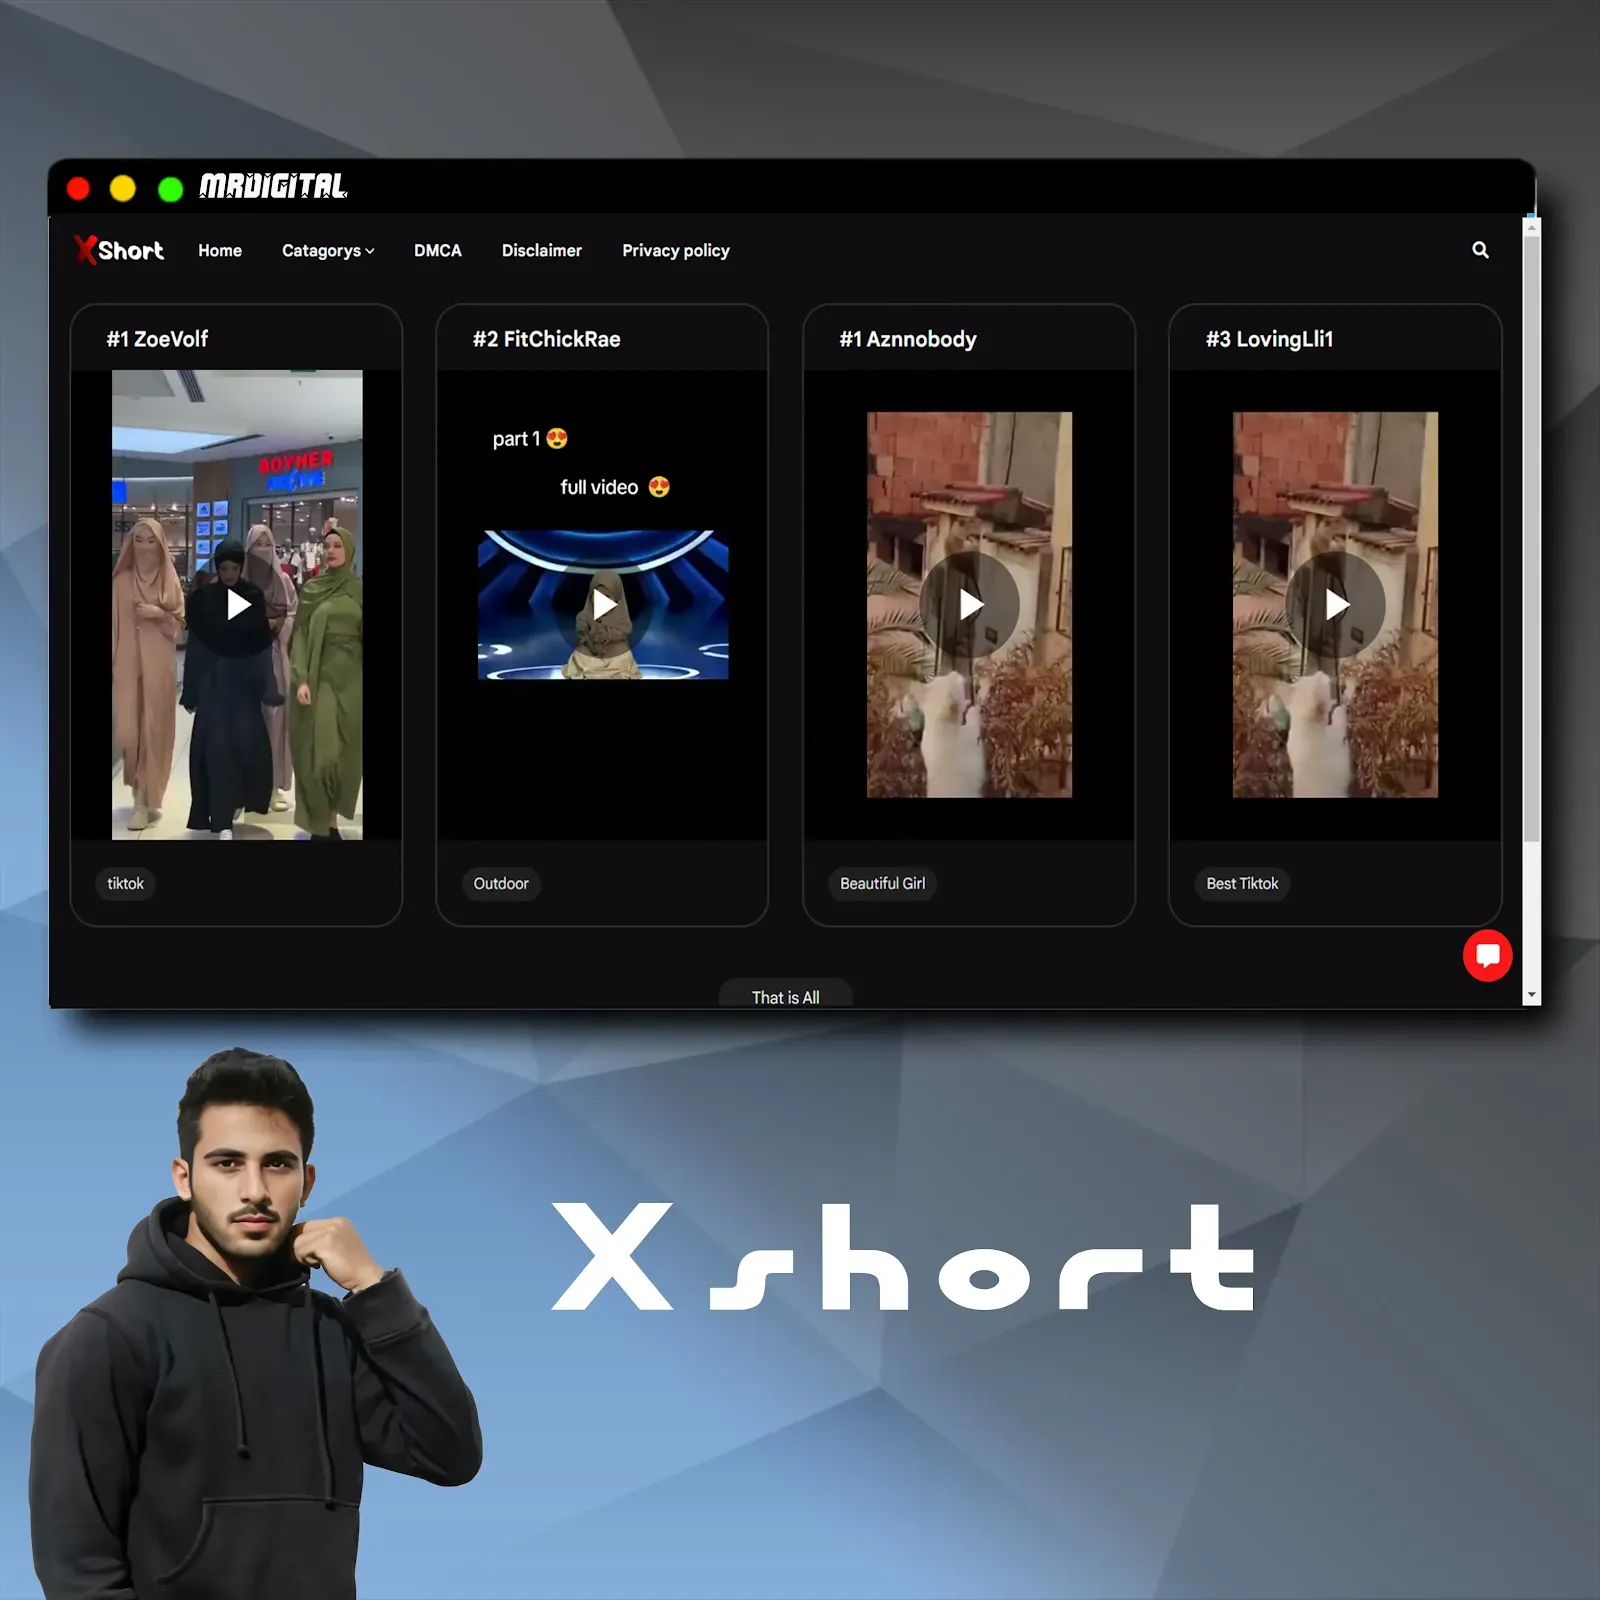 xShorts Premium Blogger Shorts Video Theme